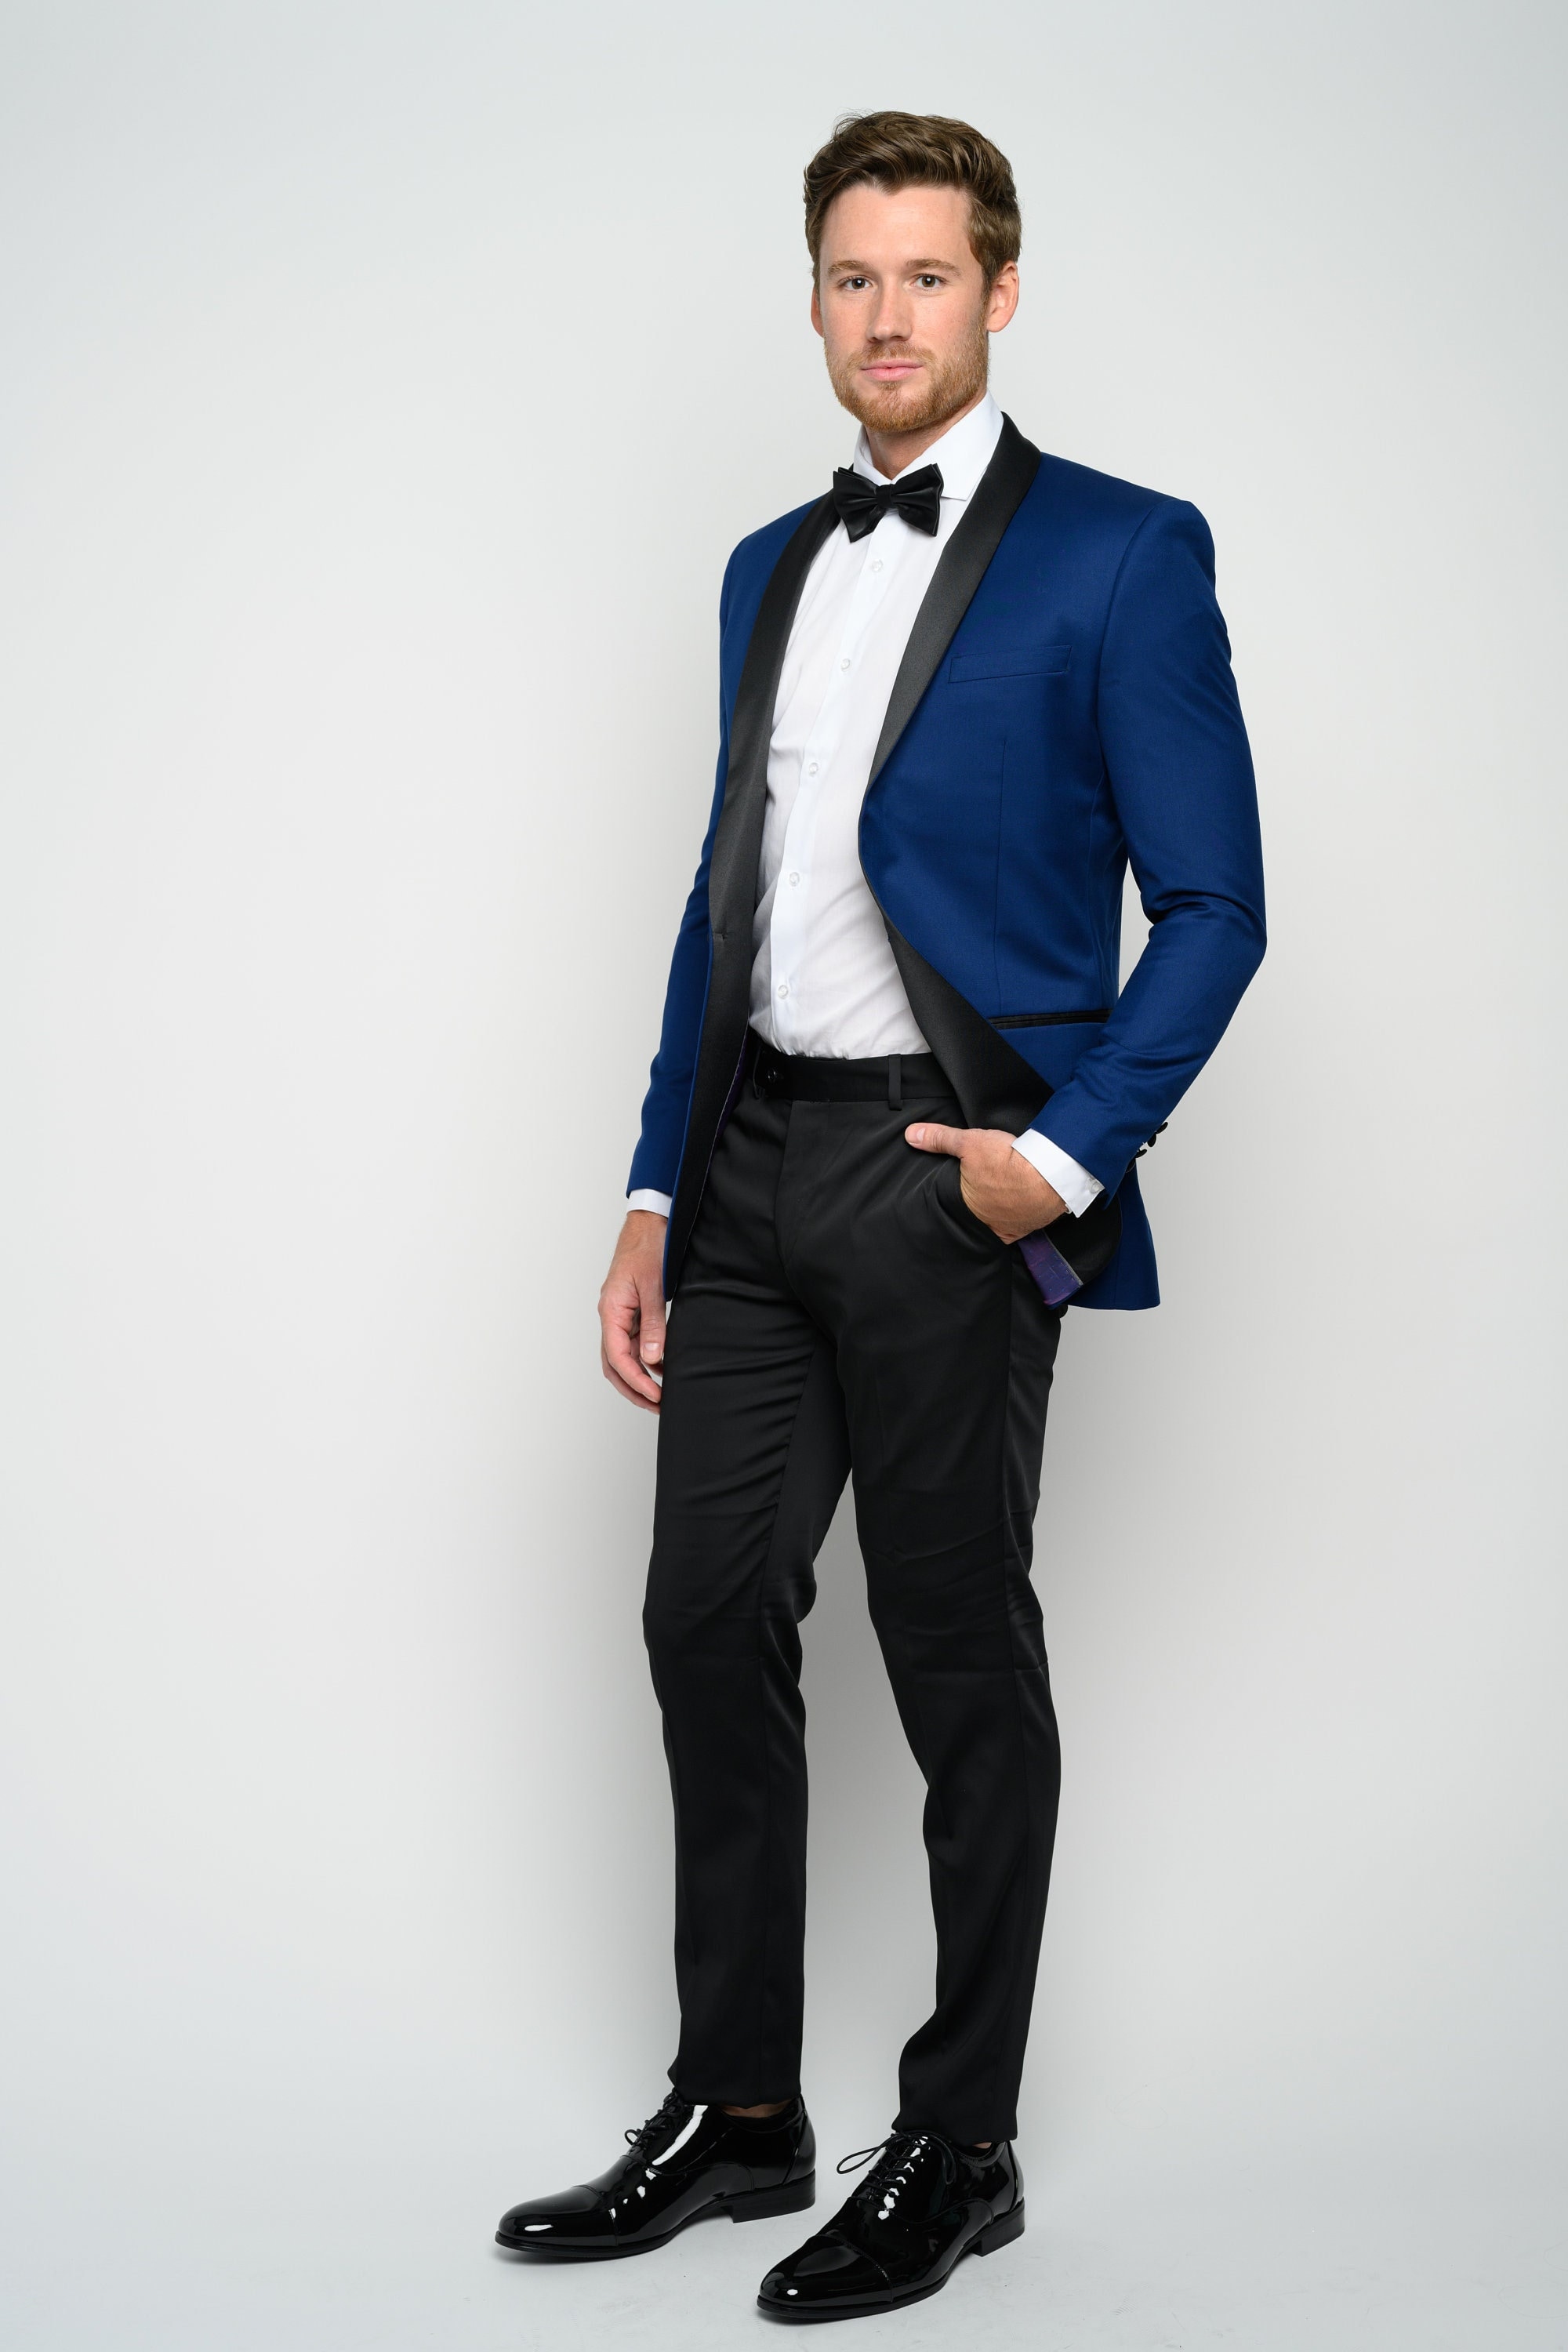 New Mens Suits Blue Jacket Black Pants Men Suits Groom Tuxedos Latest Coat  Pant Designs Formal Business Suit Custom Made 2017  Suits  AliExpress